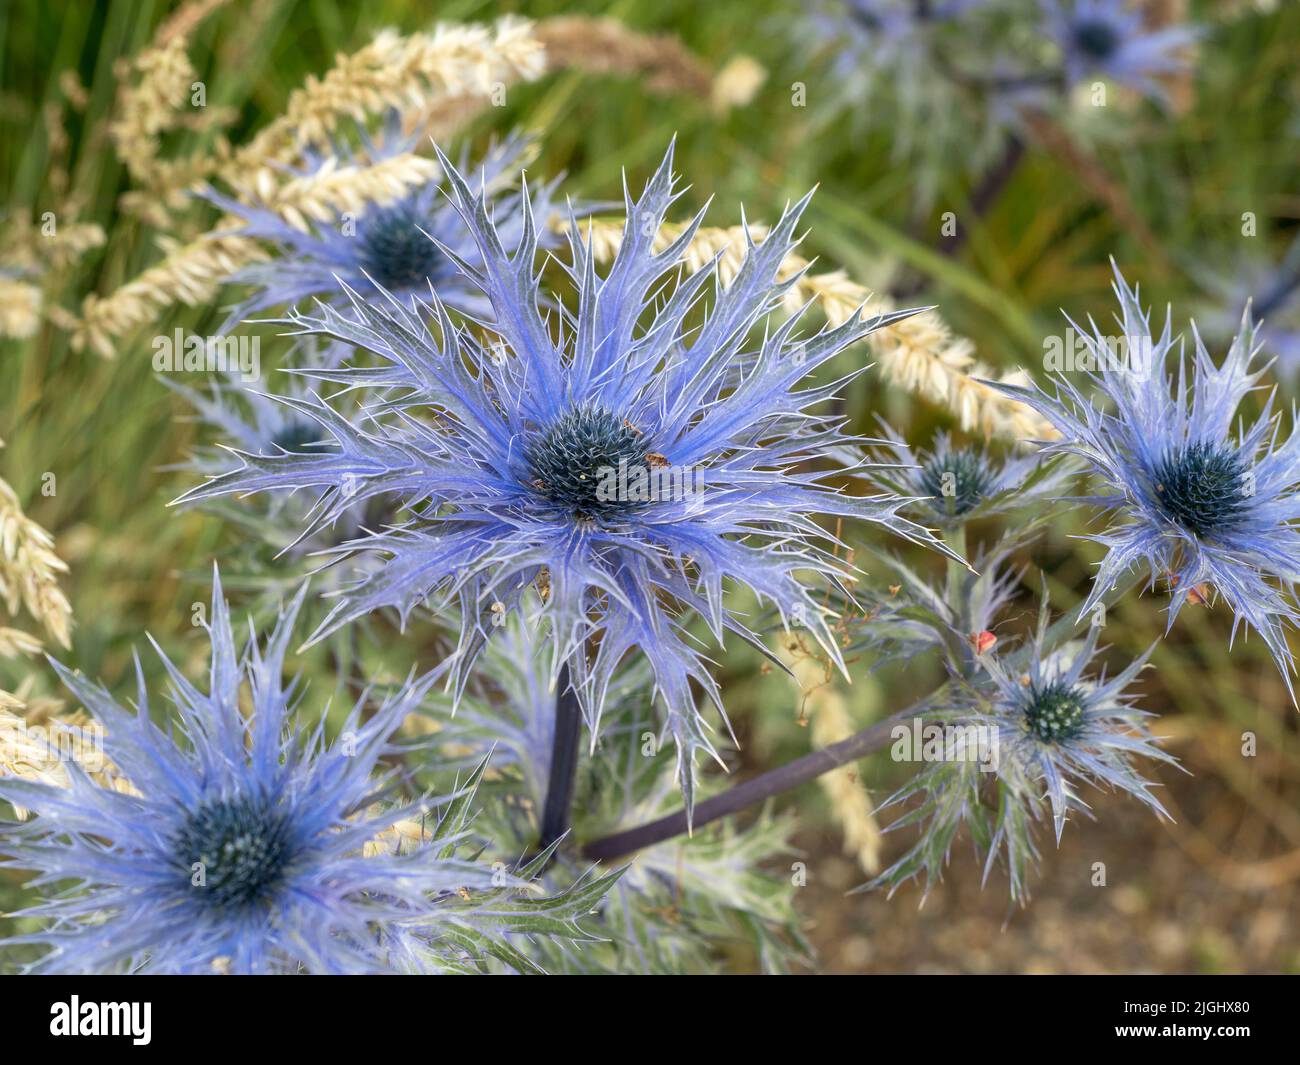 Sea holly Blue Star flowers, Eryngium alpinum Stock Photo